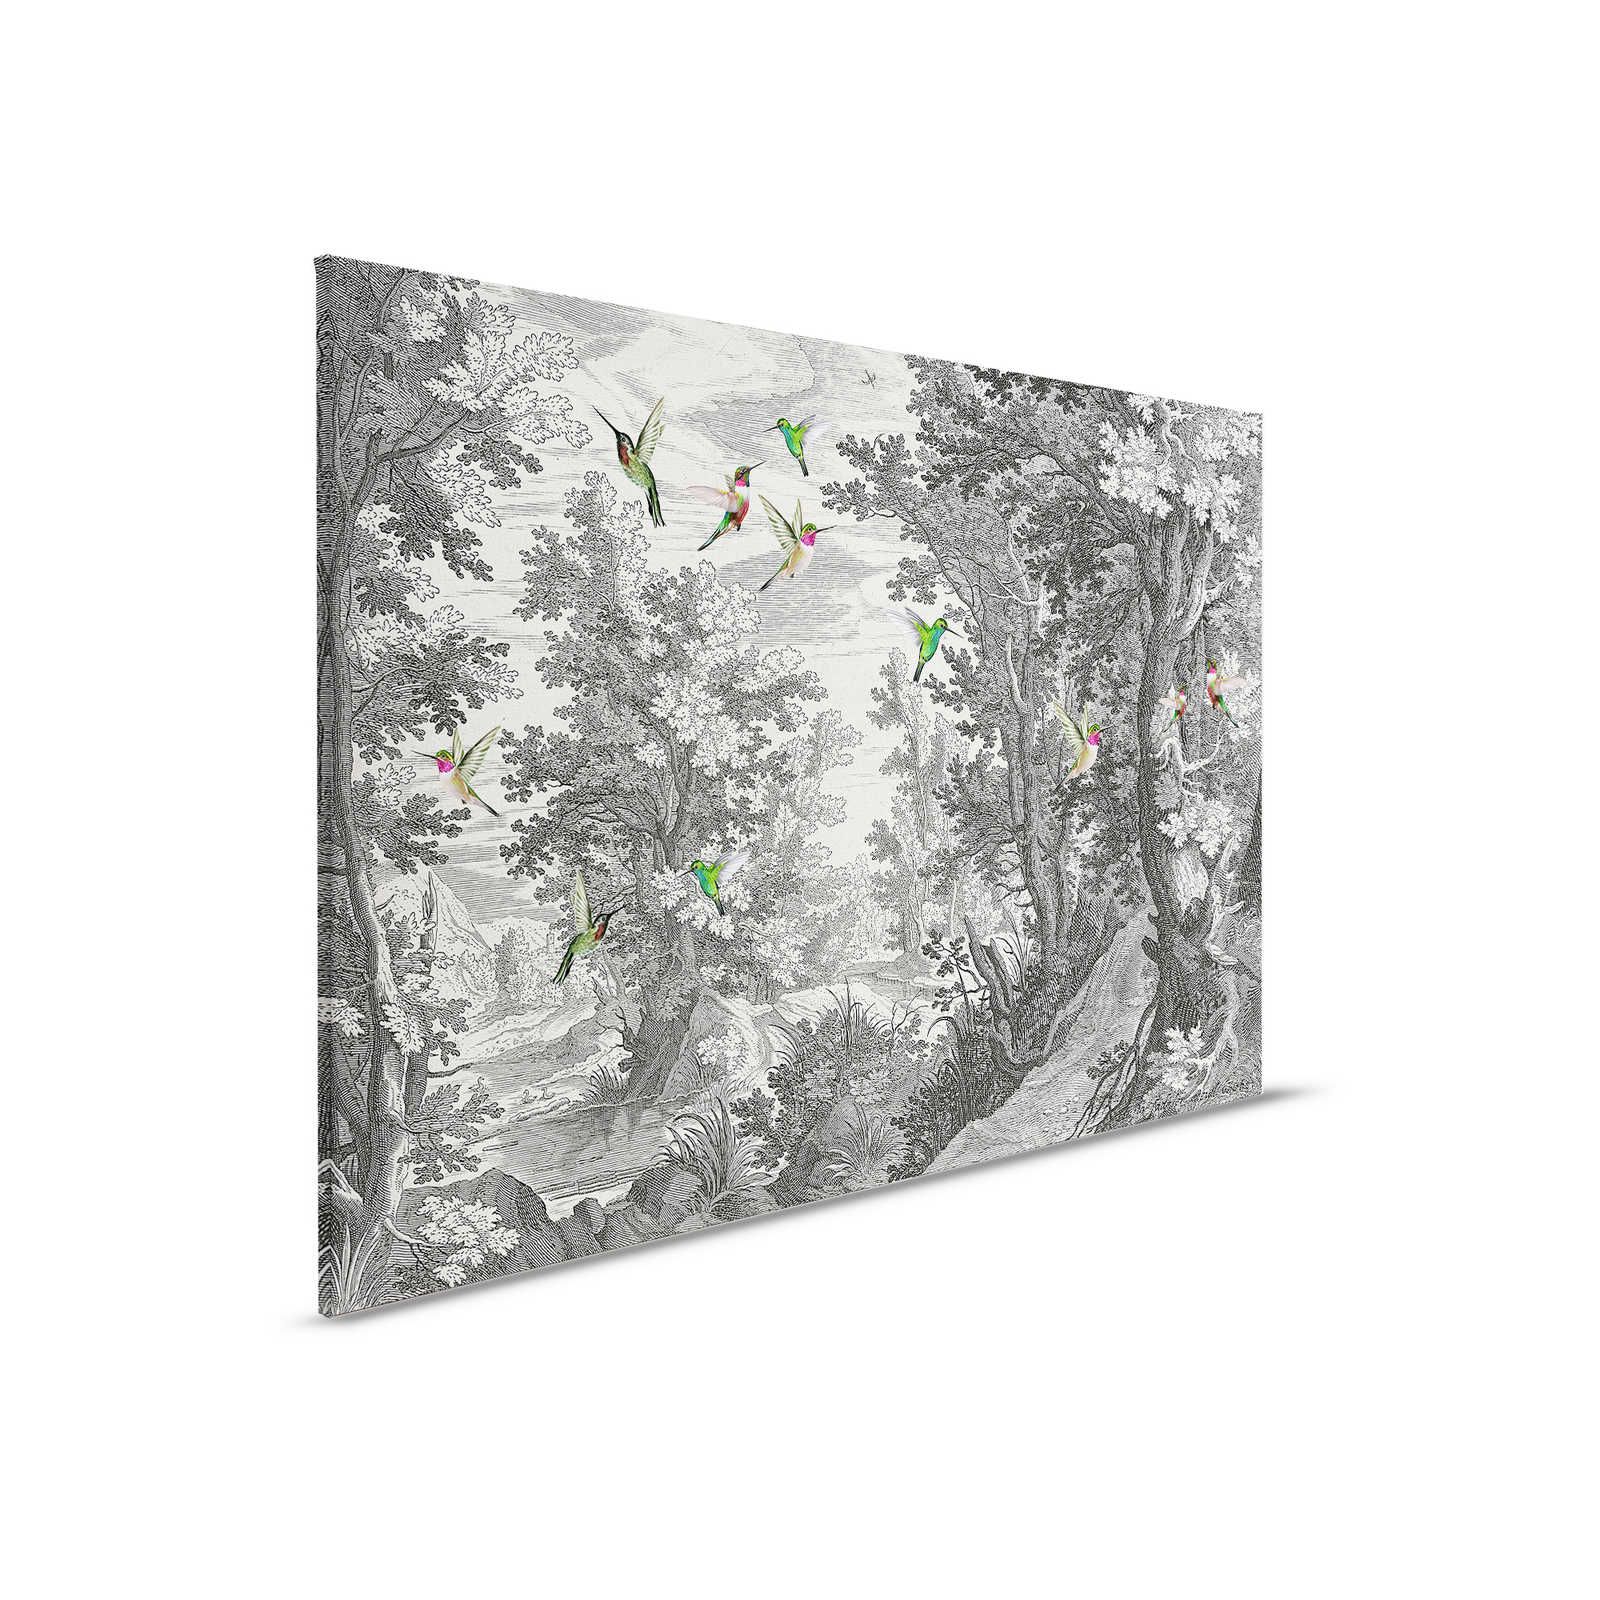         Fancy Forest 1 - Landscape Canvas Print with Birds - 0.90 m x 0.60 m
    